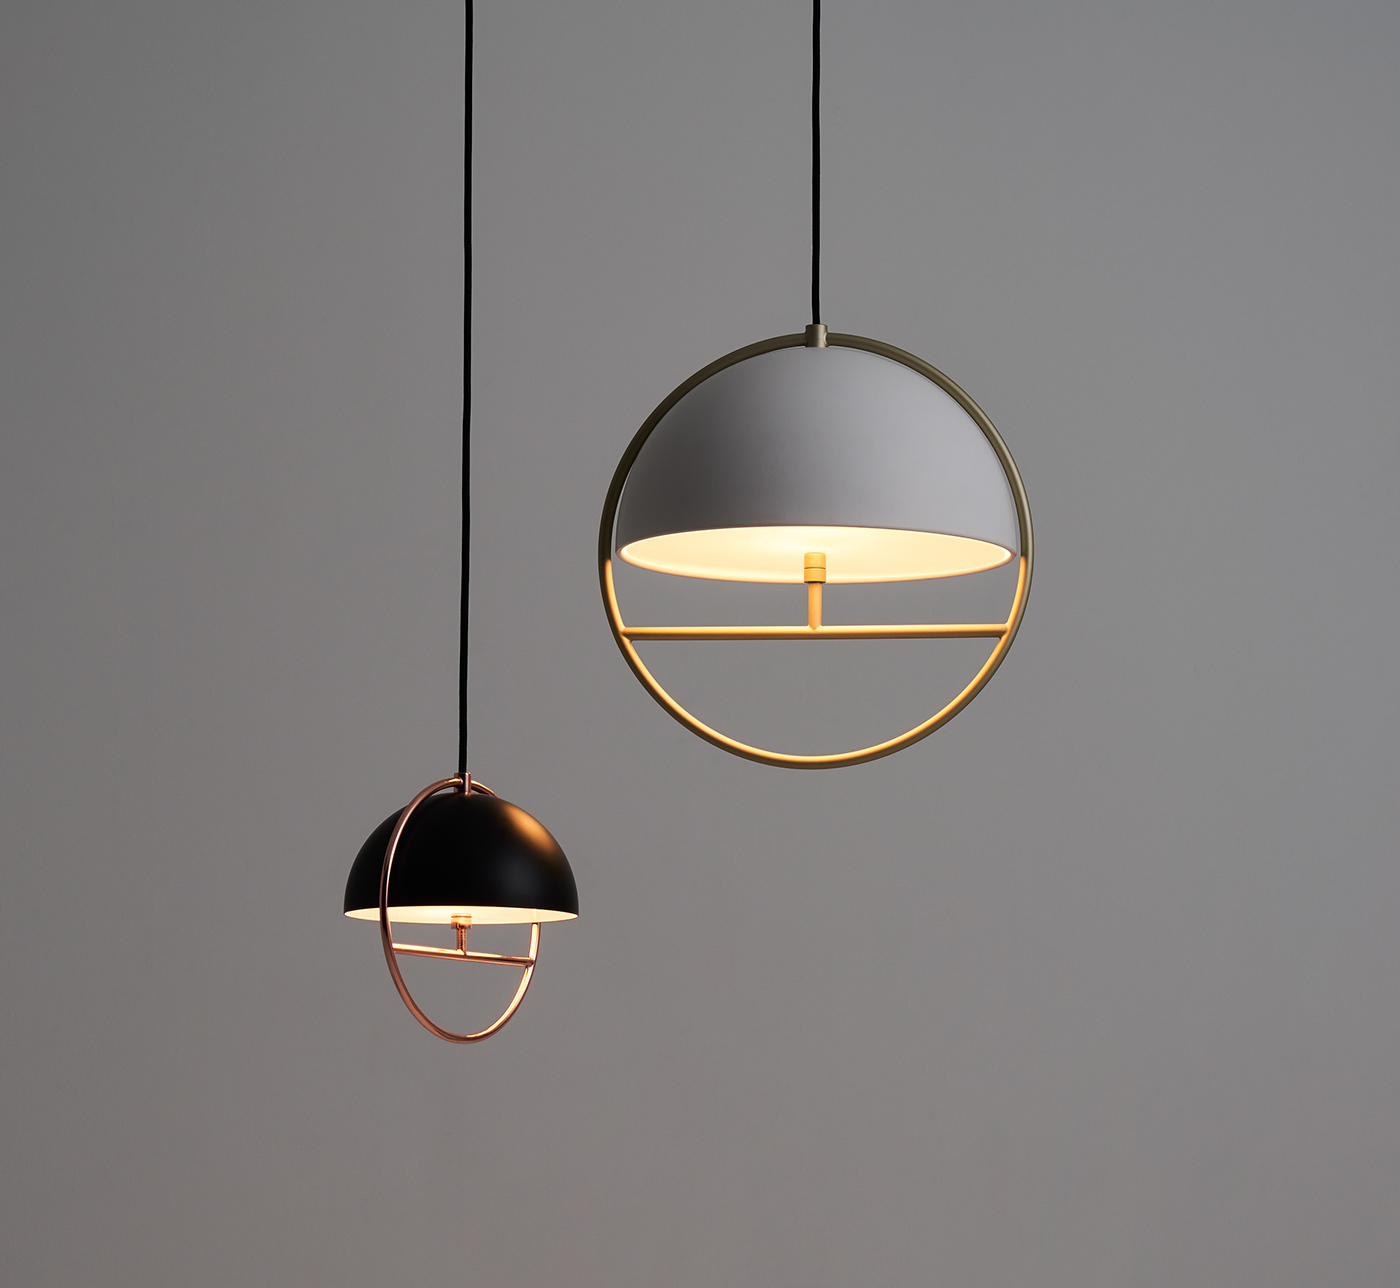 lighting product design 